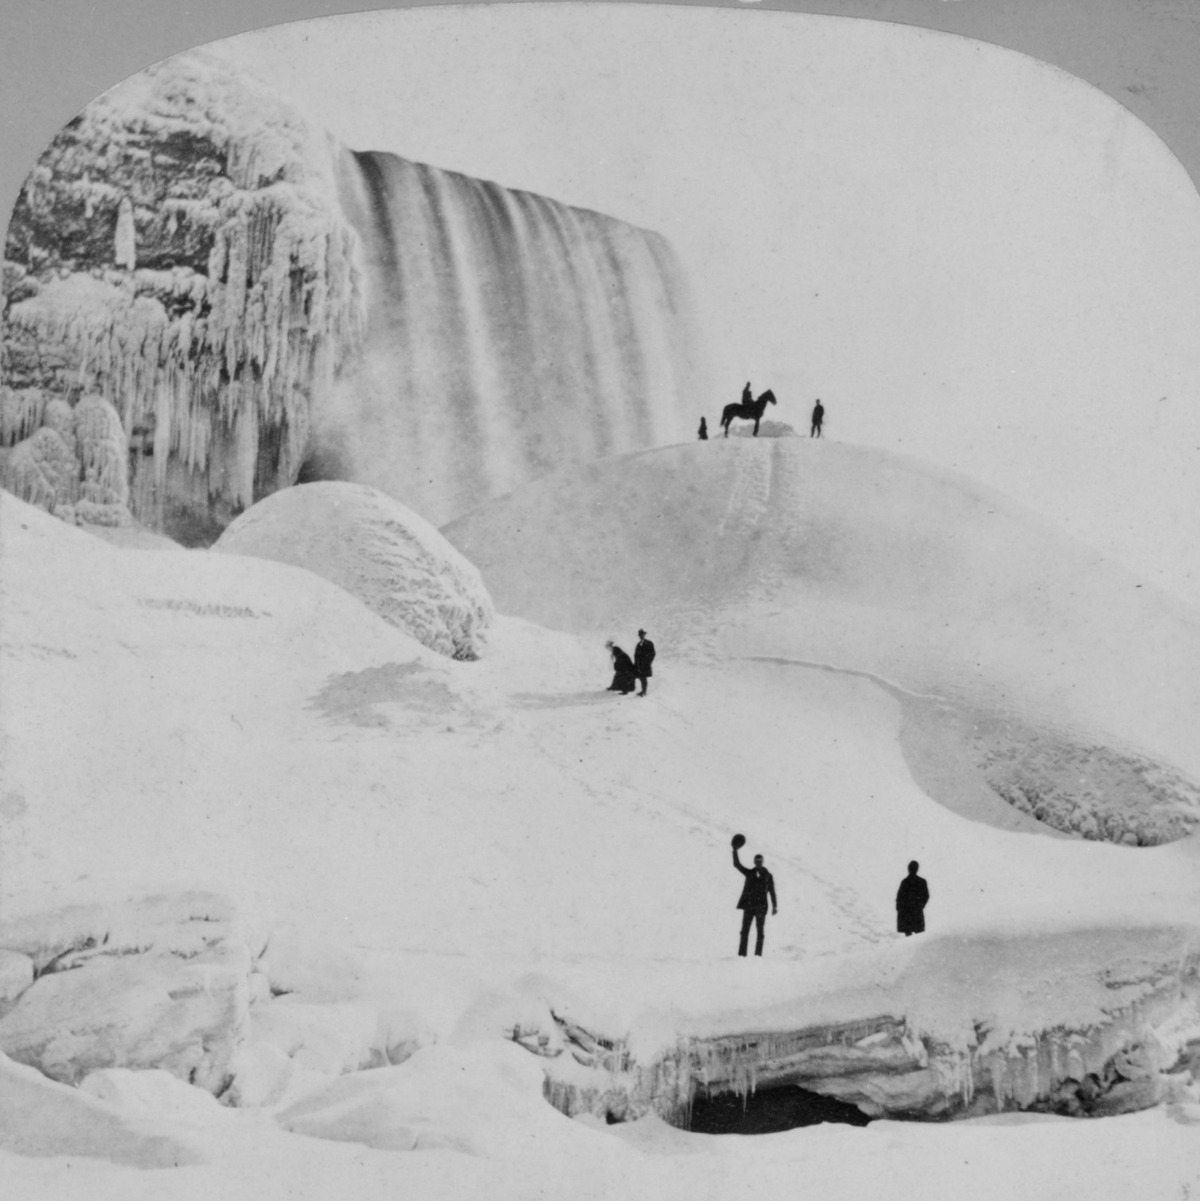 Stunning Vintage Photos Capture Frozen Niagara Falls in Late 19th